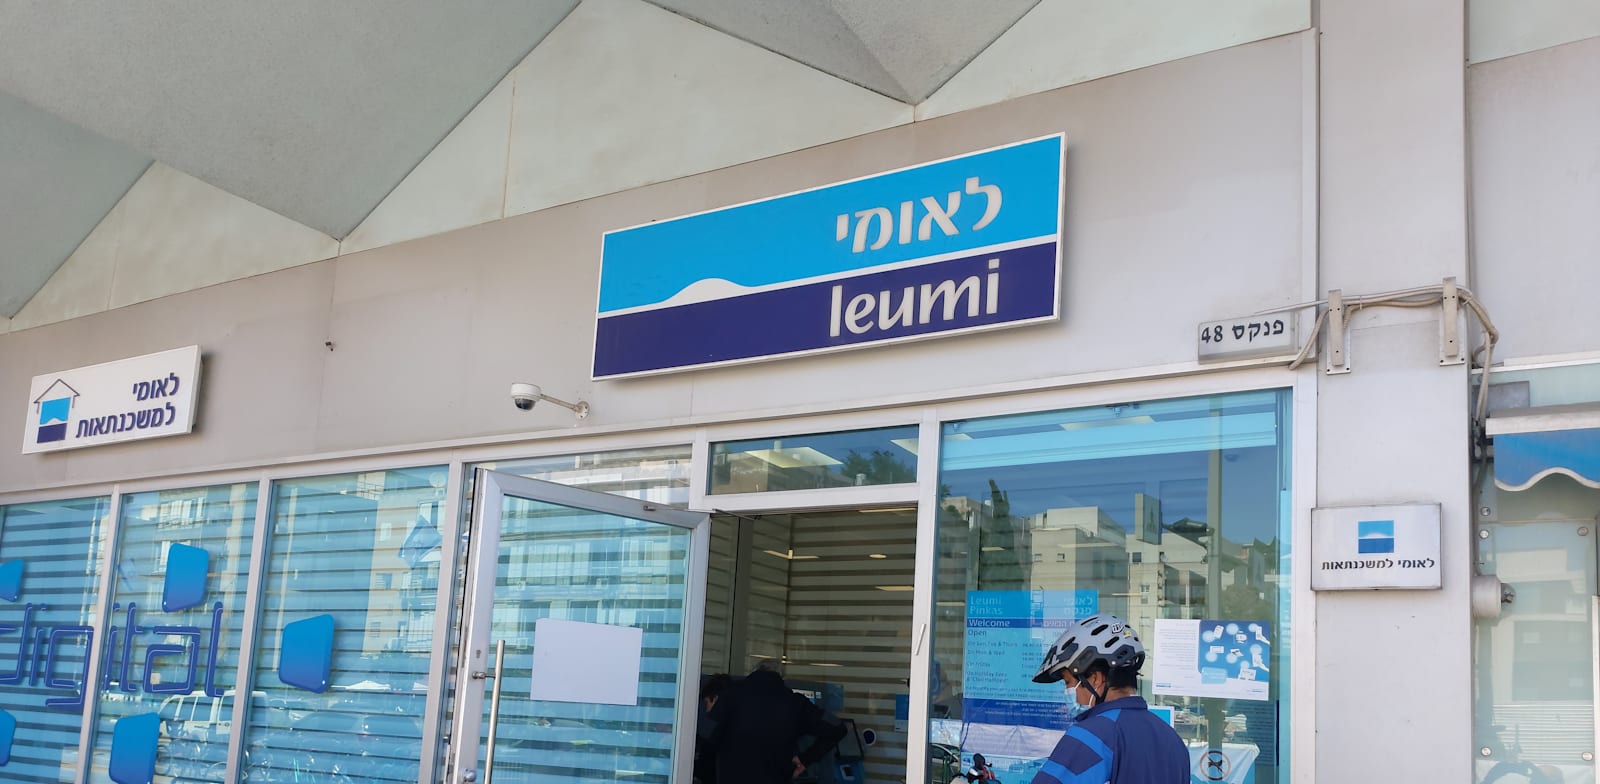 Bank Leumi branch  credit: Eyal Izhar